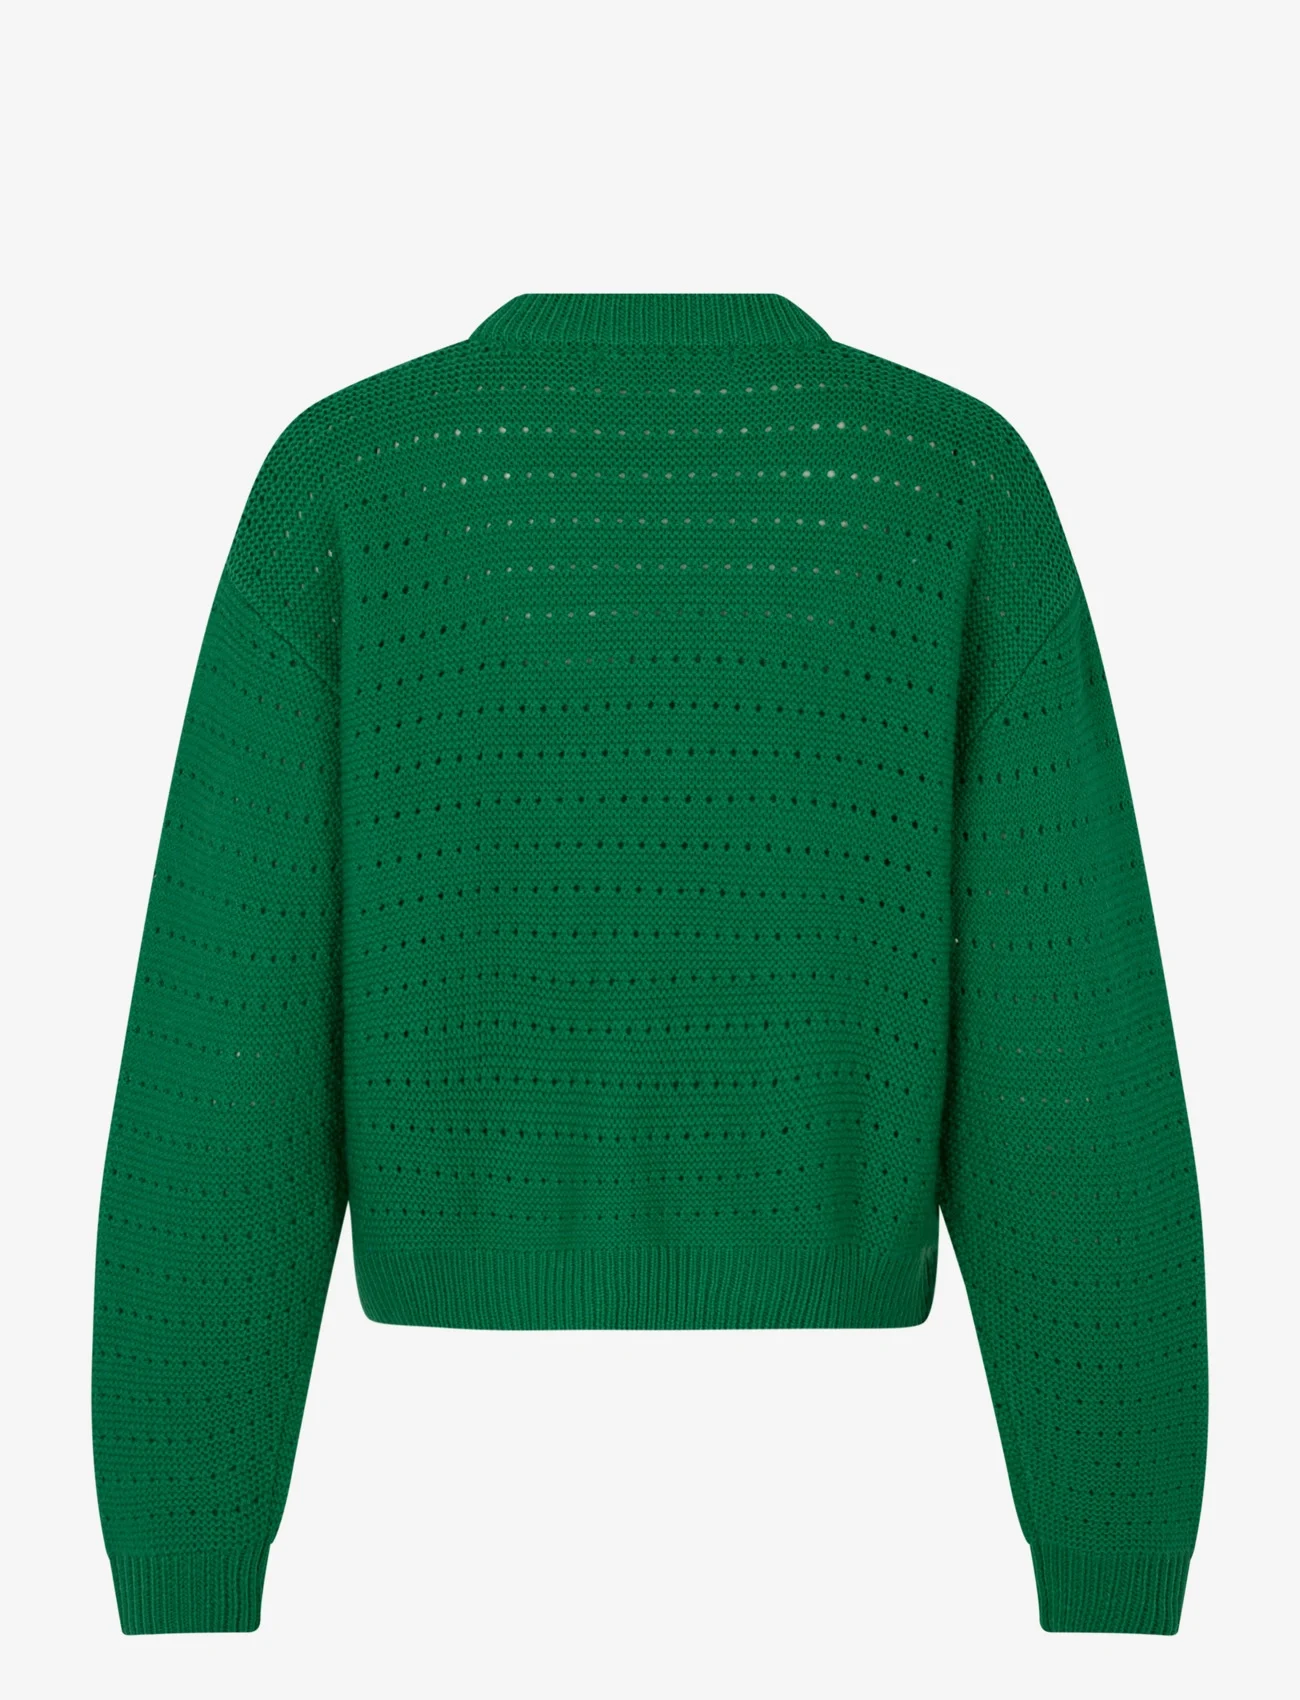 Custommade - Taia - tröjor - 311 kelly green - 1